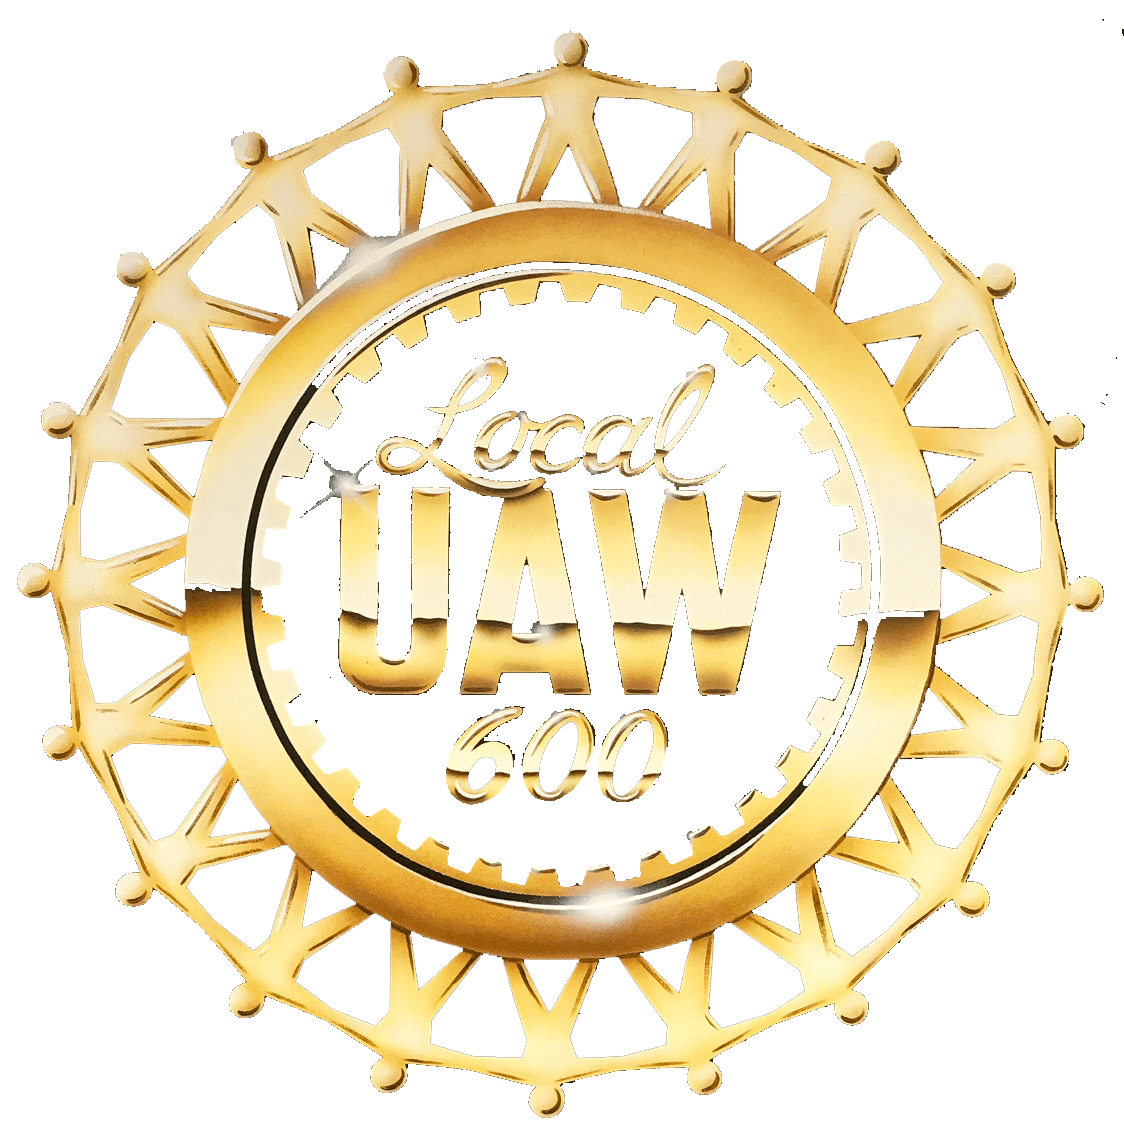 Local UAW Logo - Home - UAW Local 600 Website